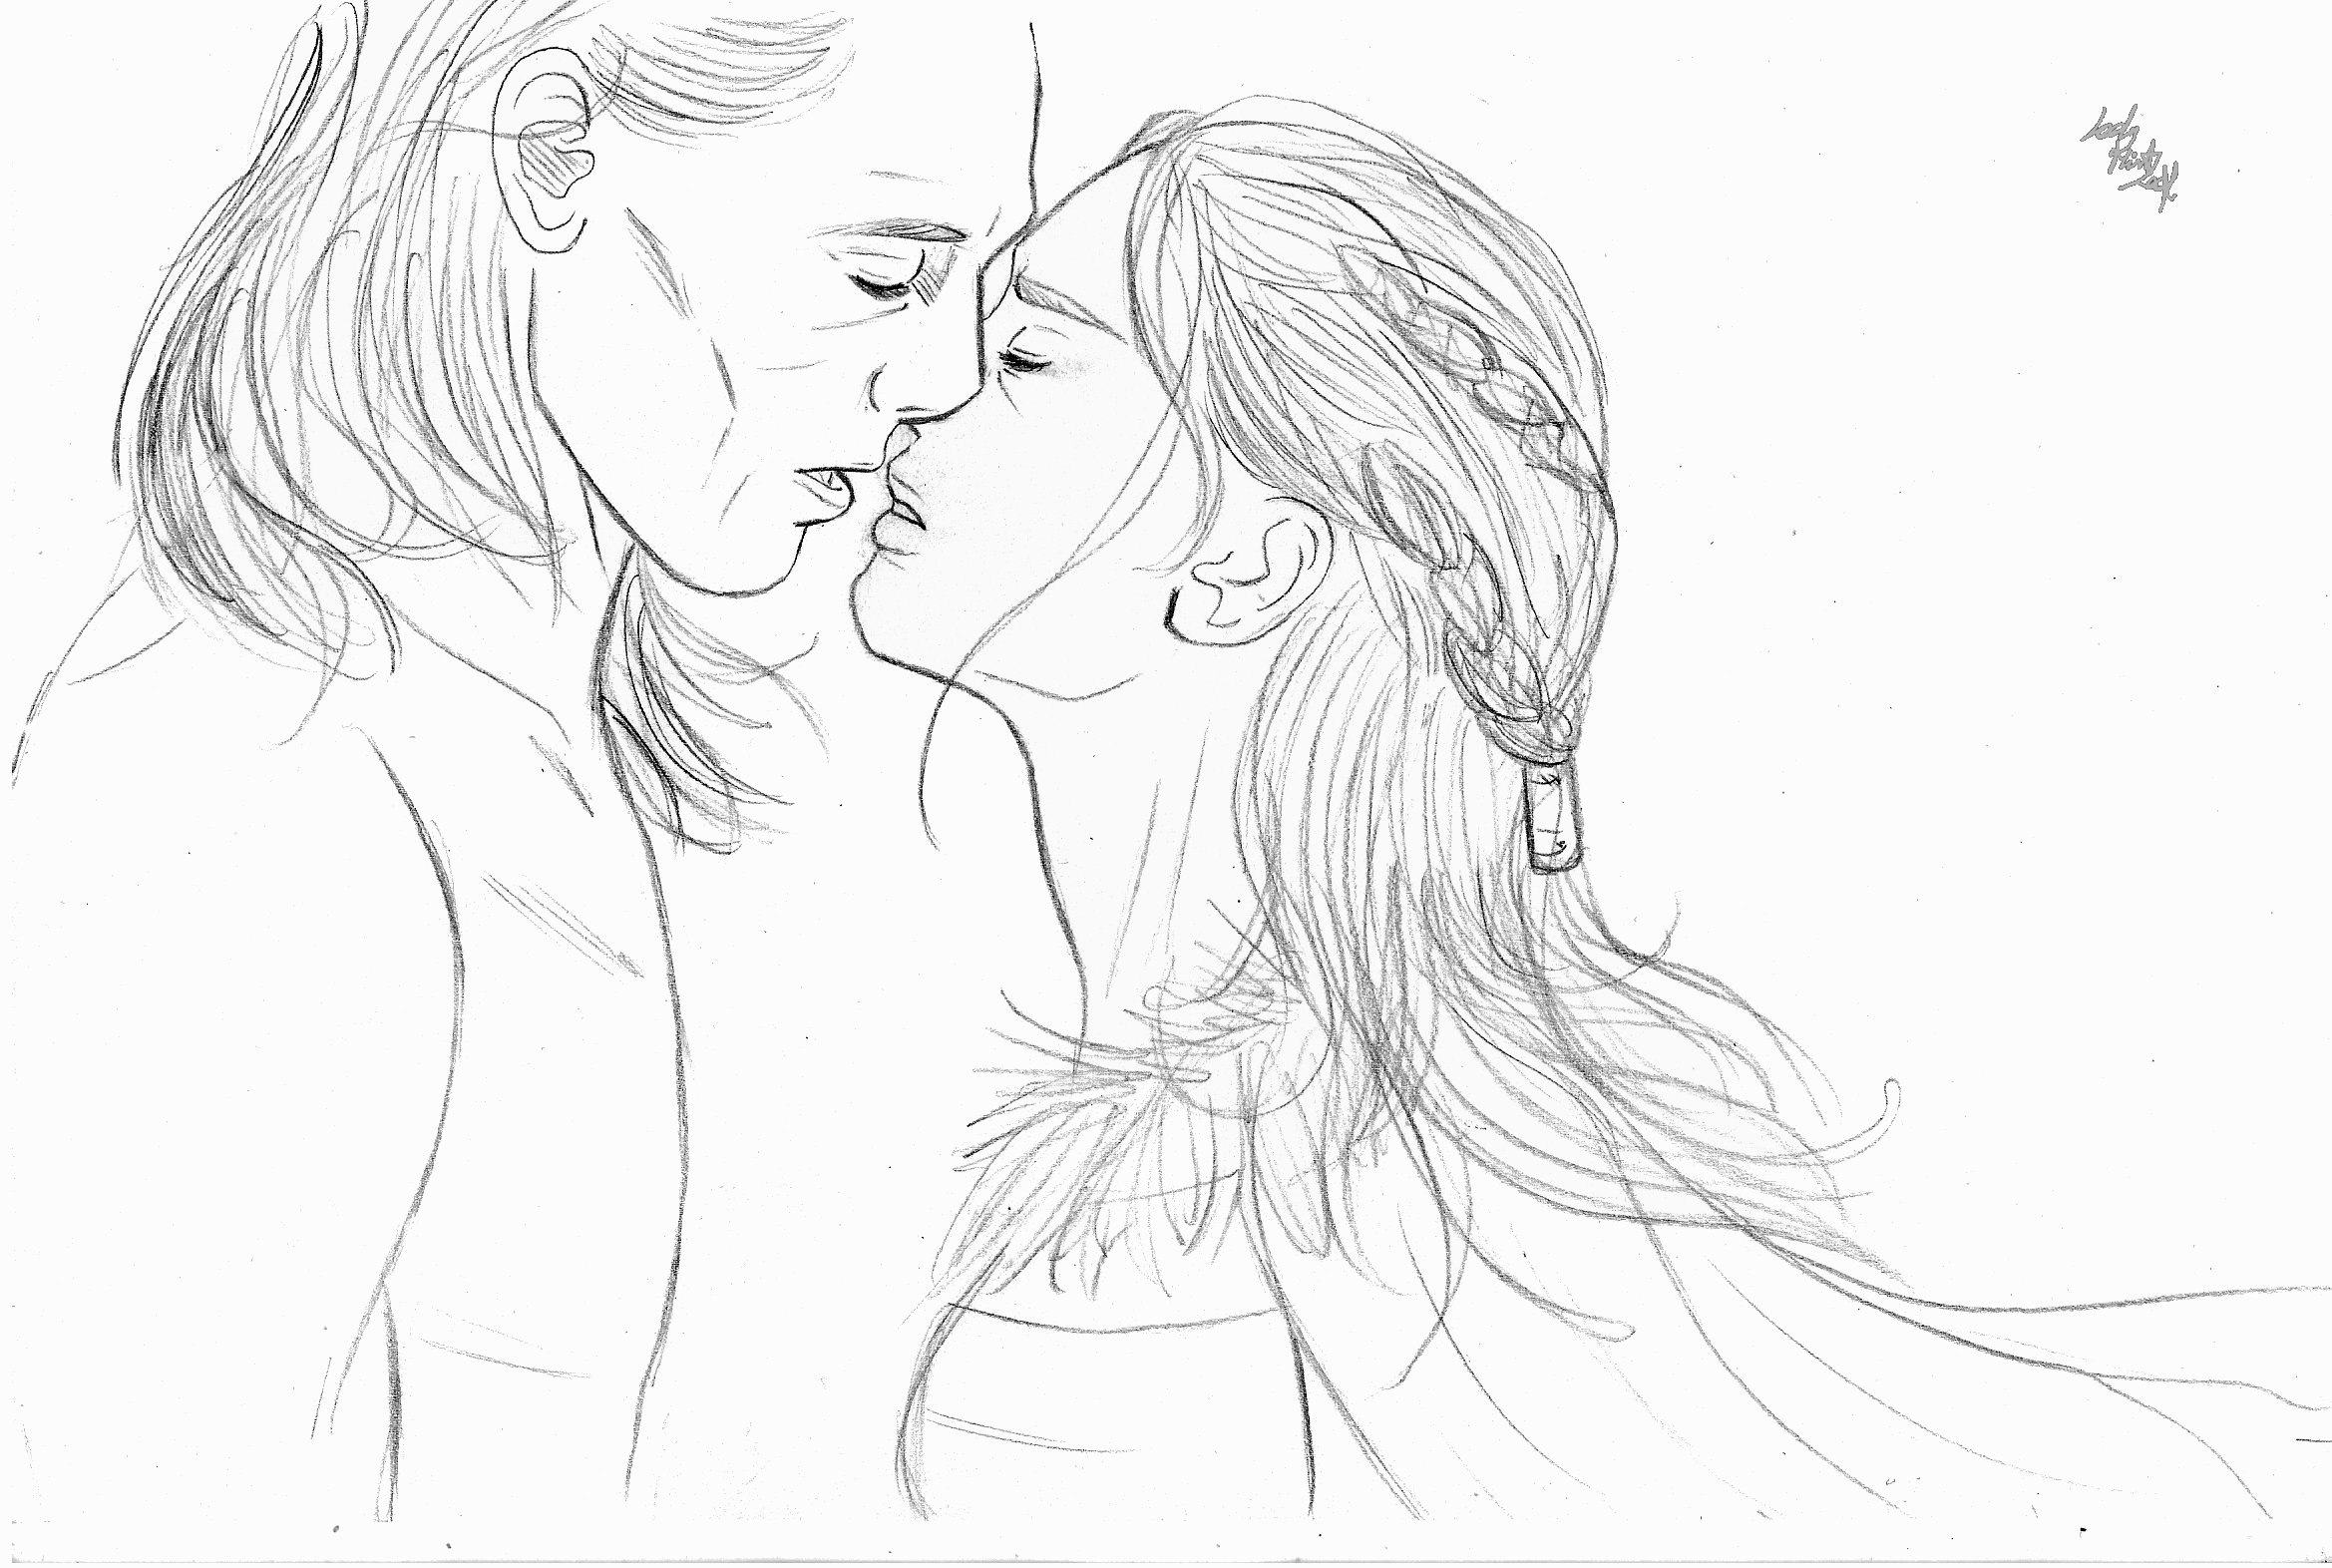 Loki and Sigyn kiss animation- GIF (sketch)1 by LadyMintLeaf on DeviantArt